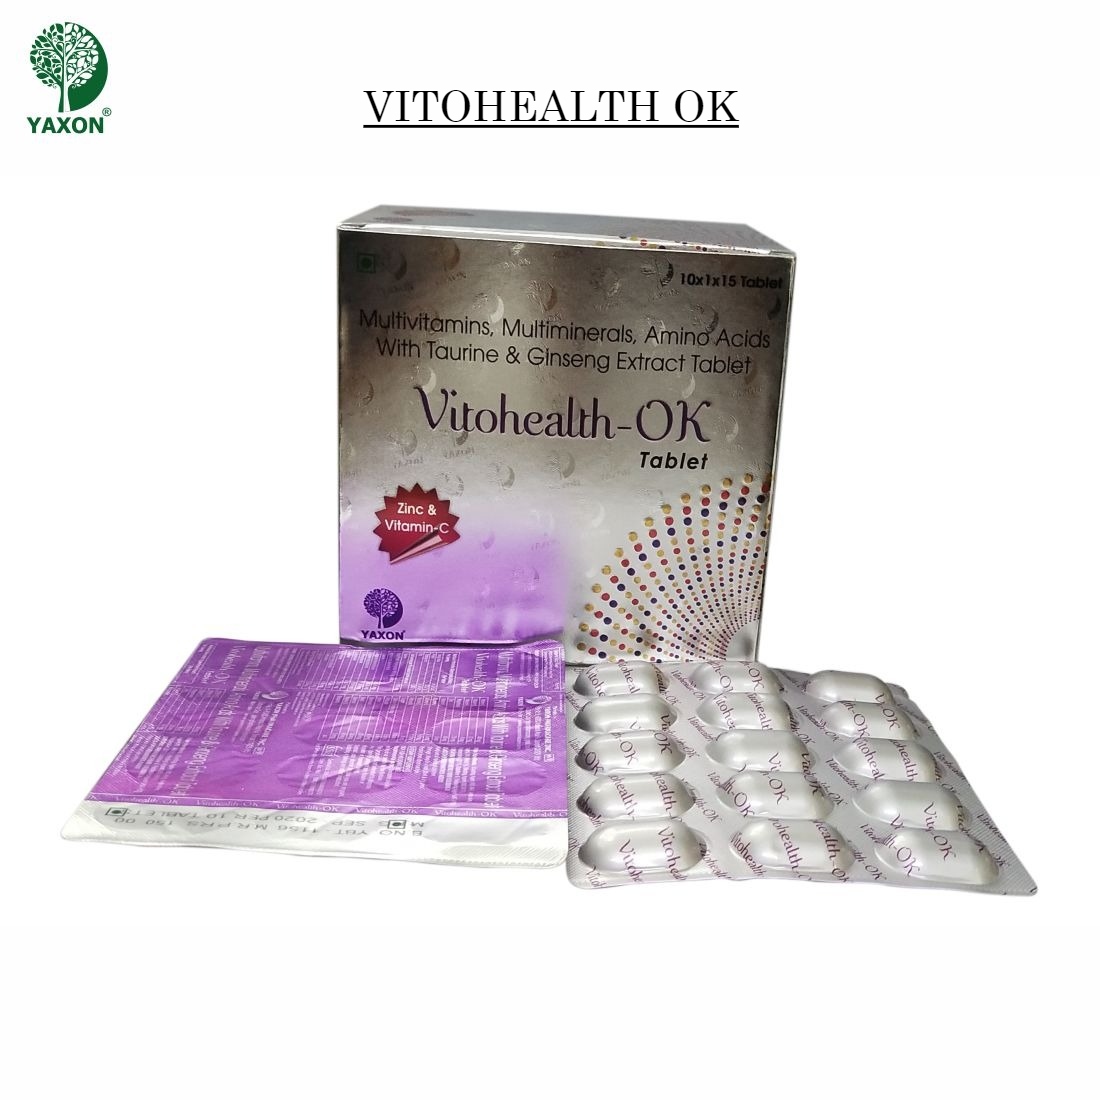 YAXON VITOHEALTH OK Immunity Tablets